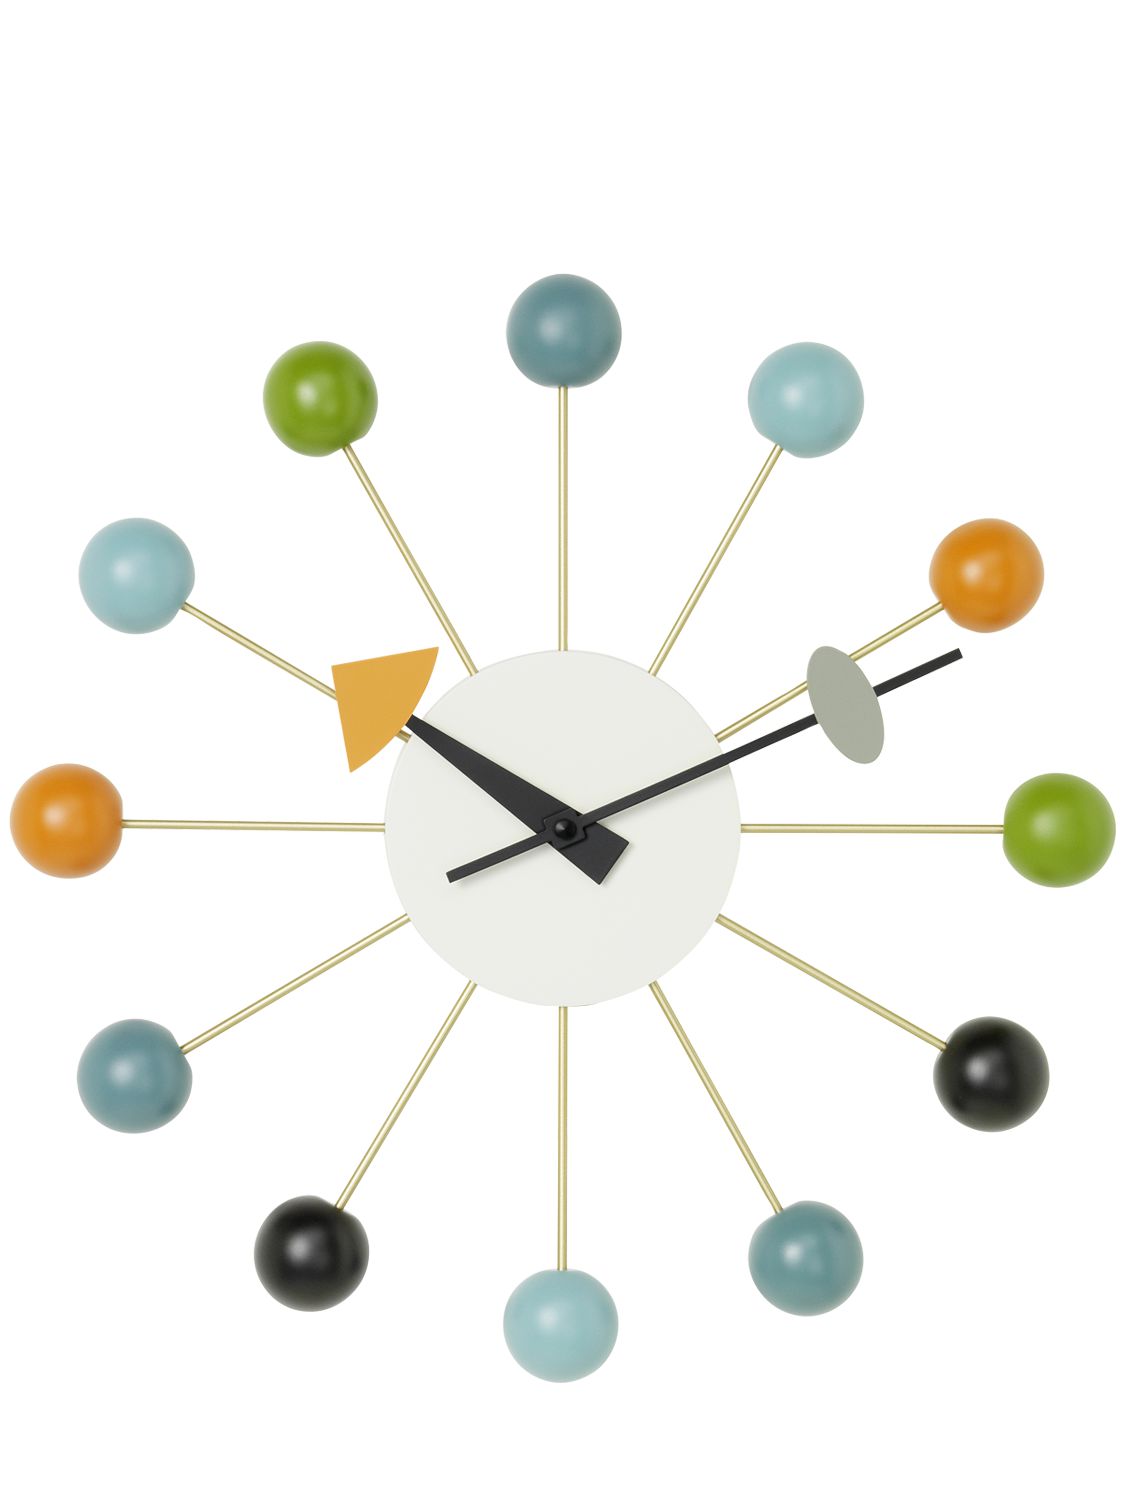 Image of Ball Clock